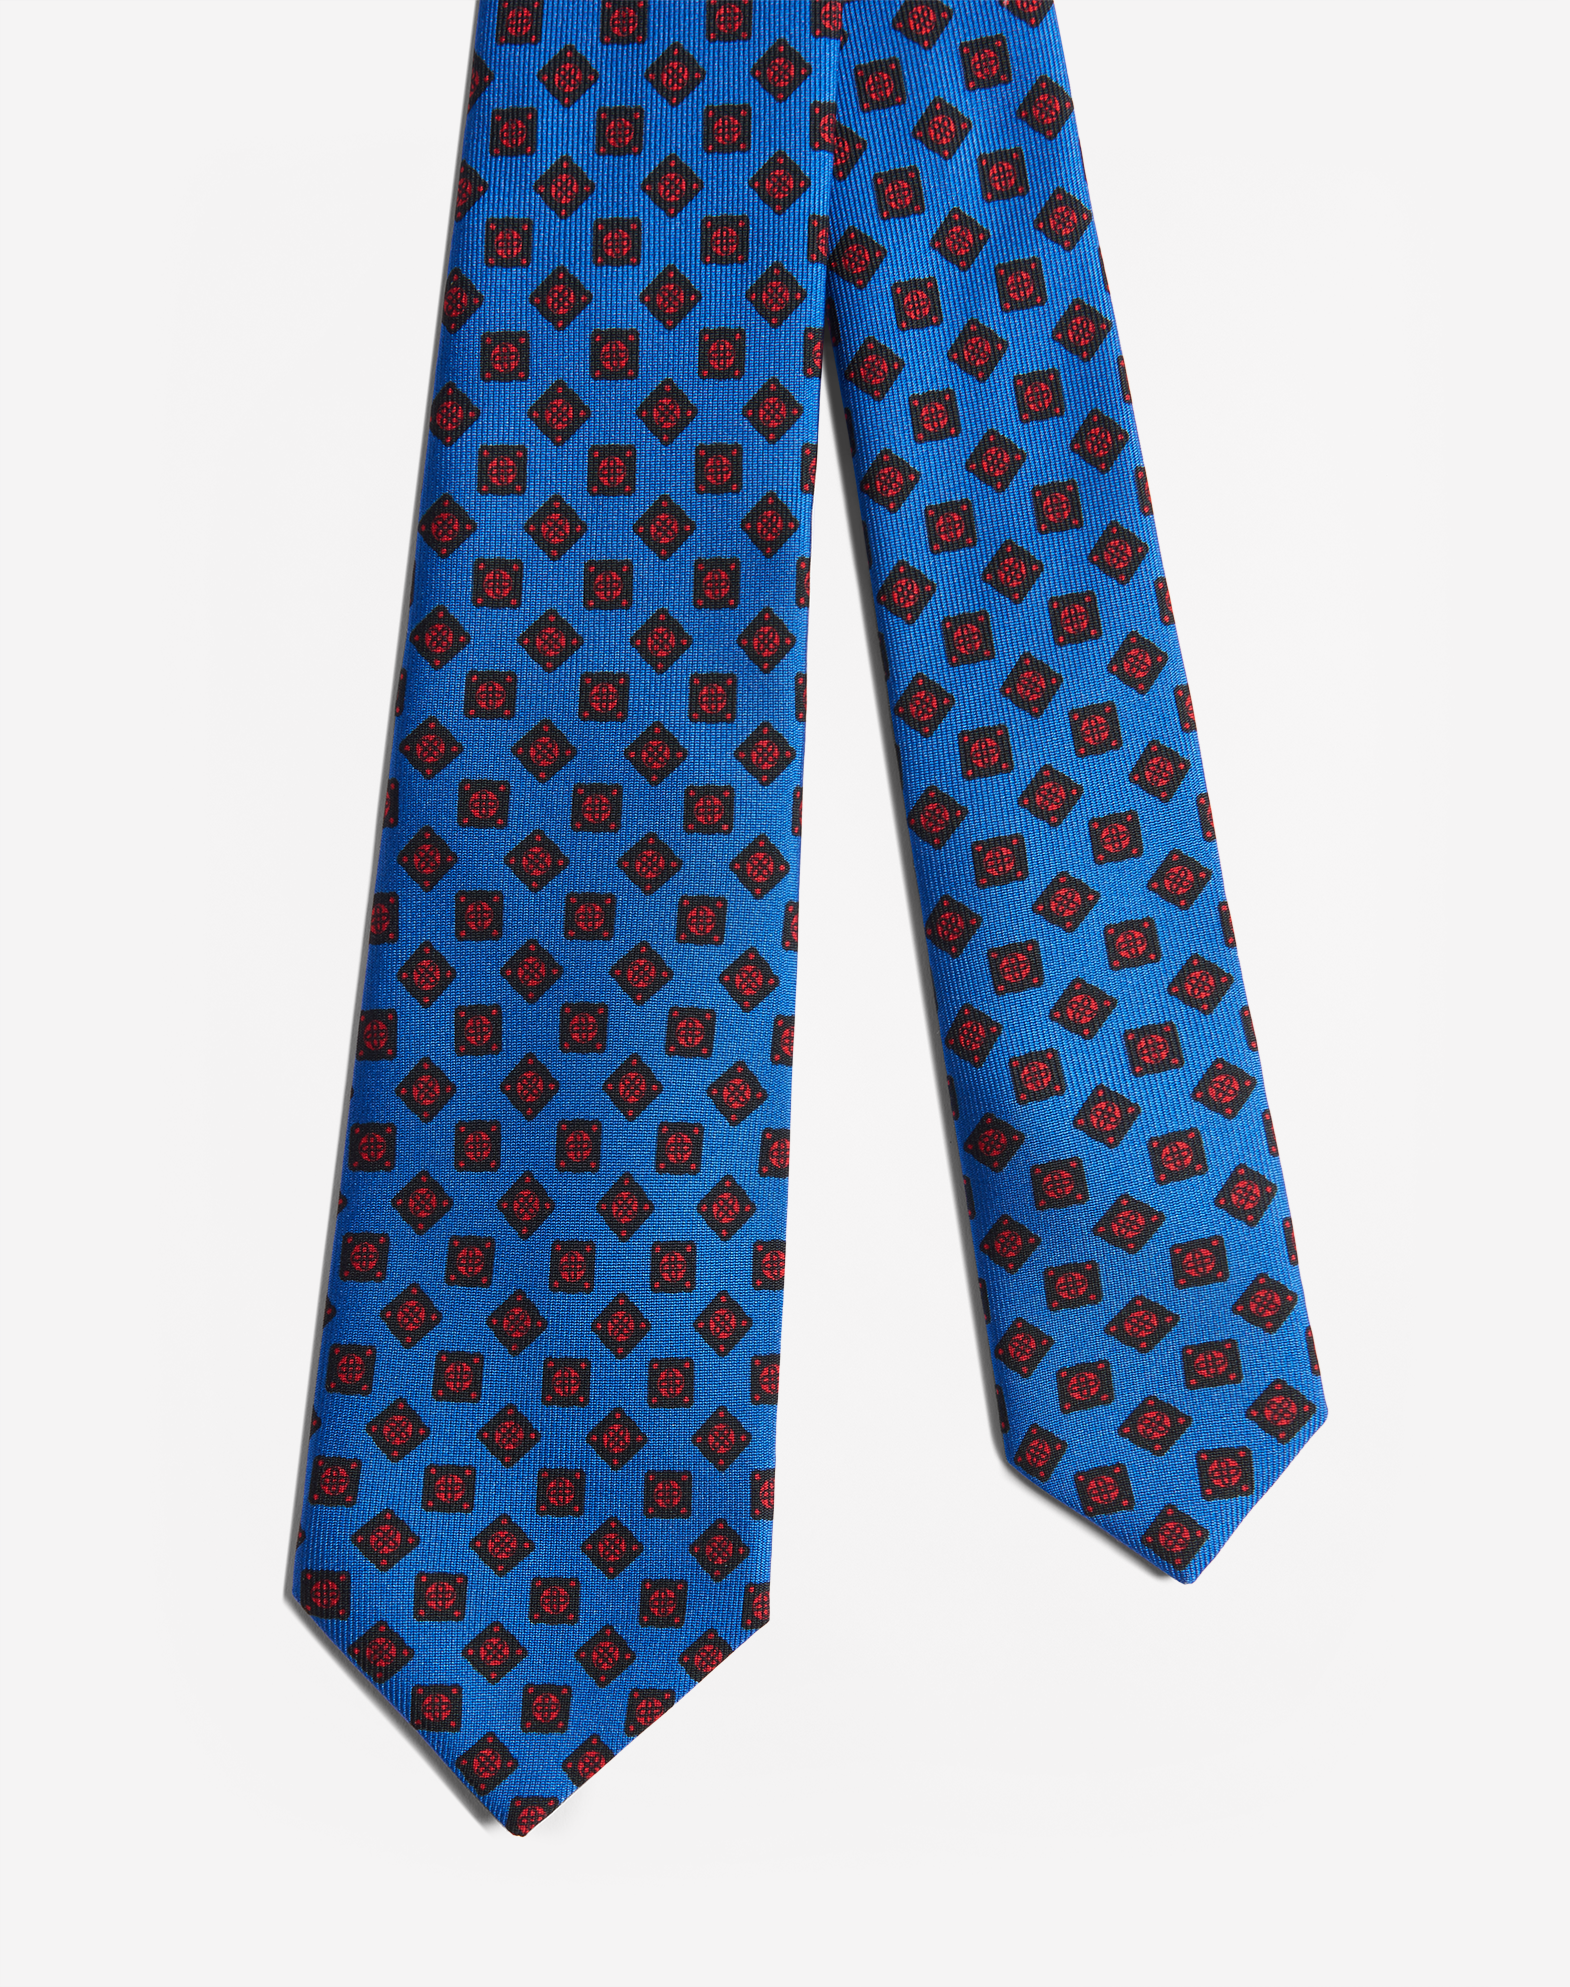 Dunhill Men's Cravatta